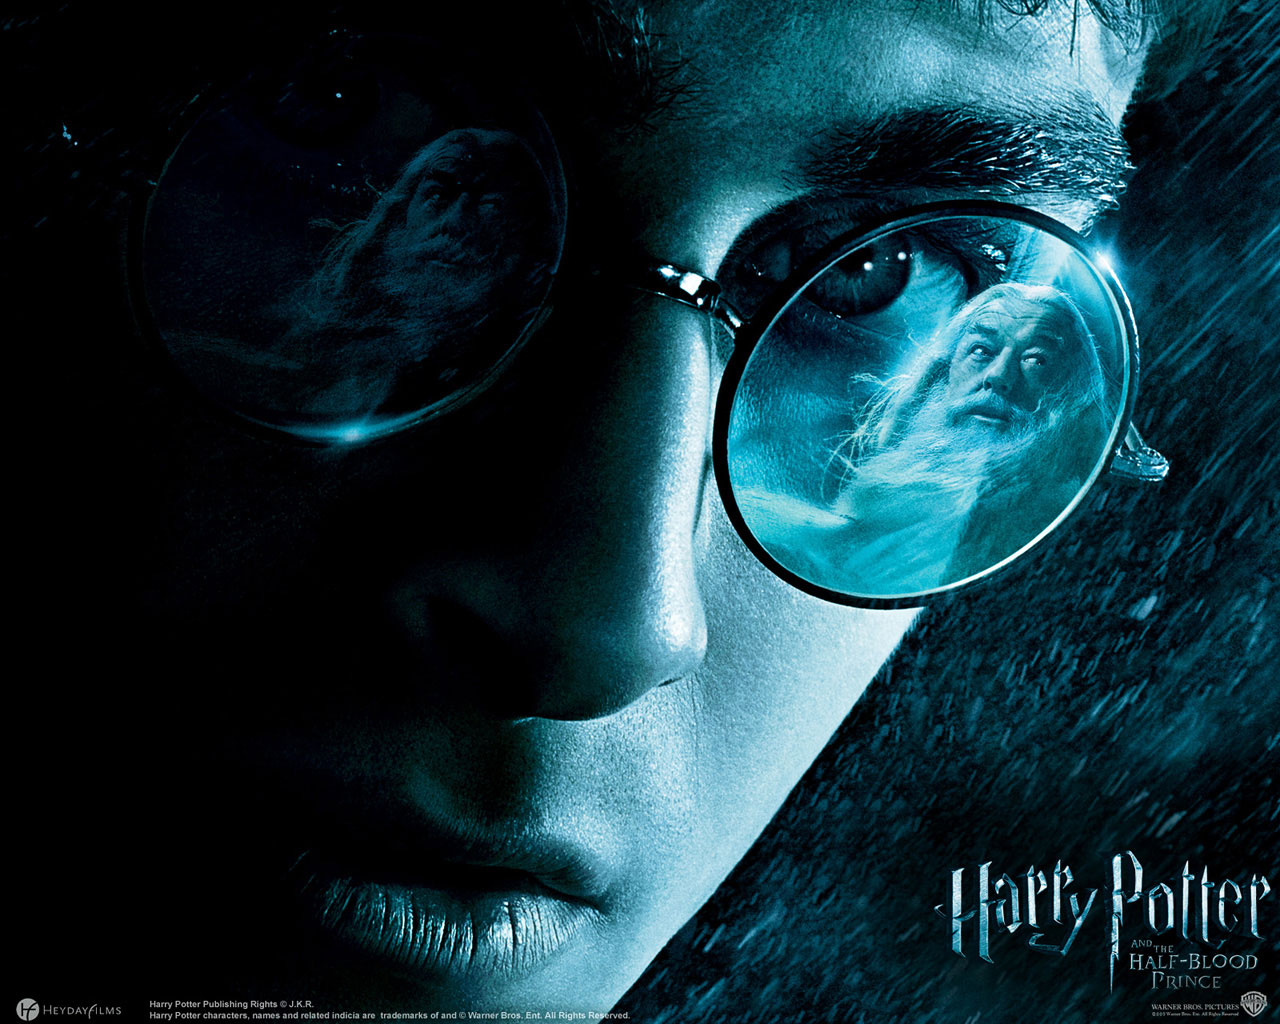 "Harry Potter and the Half-Blood Prince" desktop wallpaper (1280 x 1024 pixels)